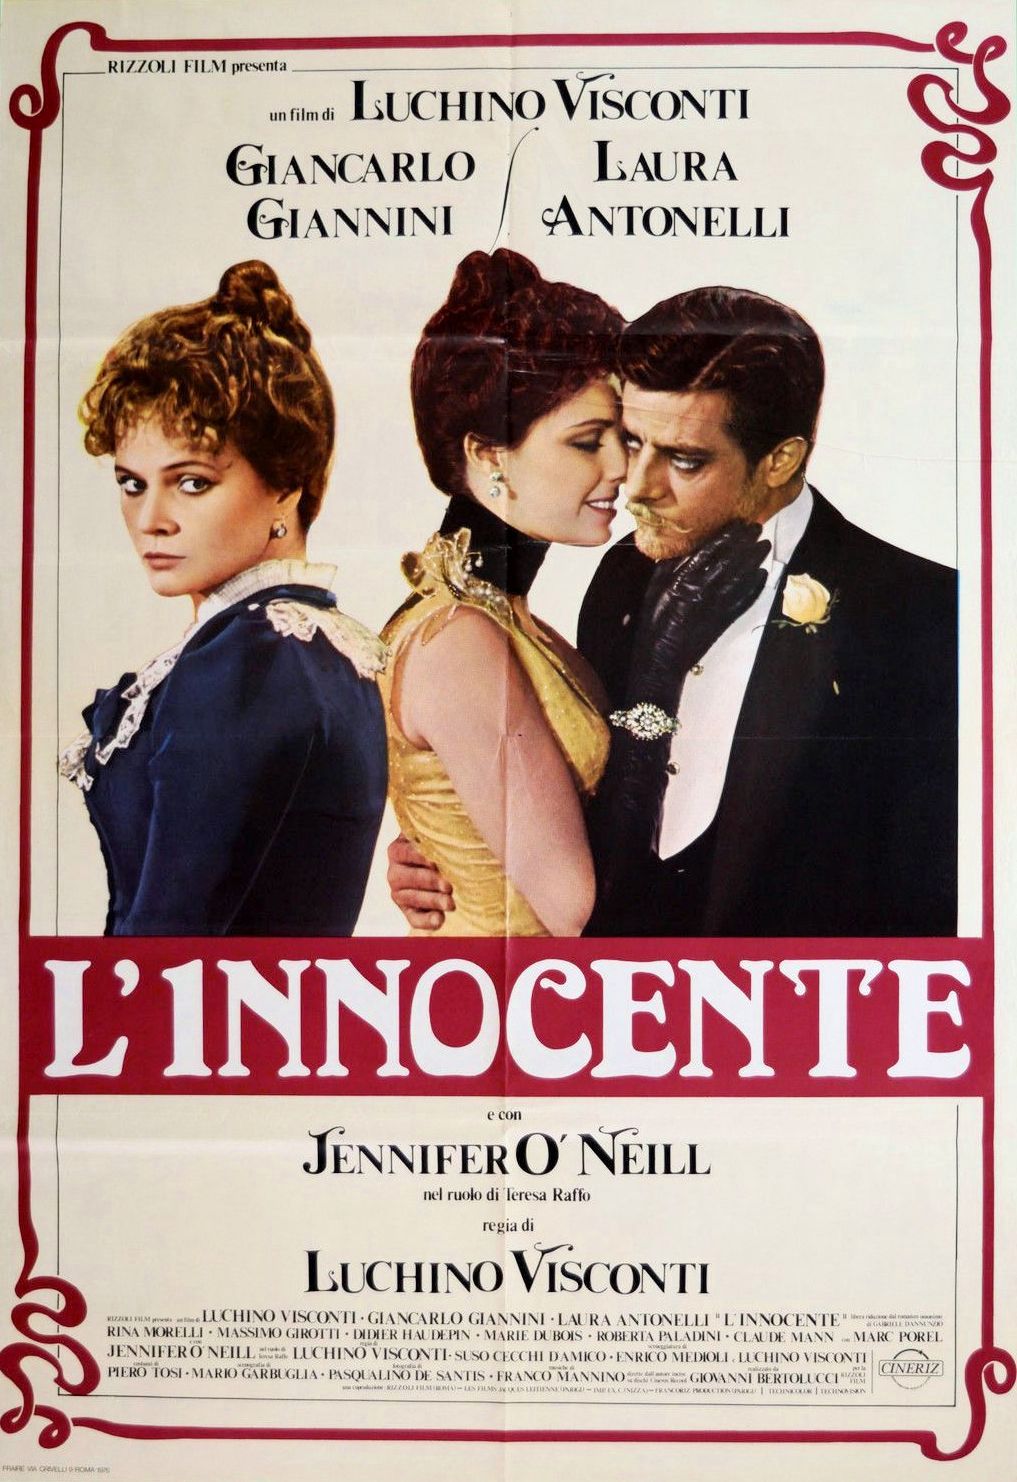 Jennifer O'Neill در صحنه فیلم سینمایی L'innocente به همراه جانکارلو جانینی و Laura Antonelli